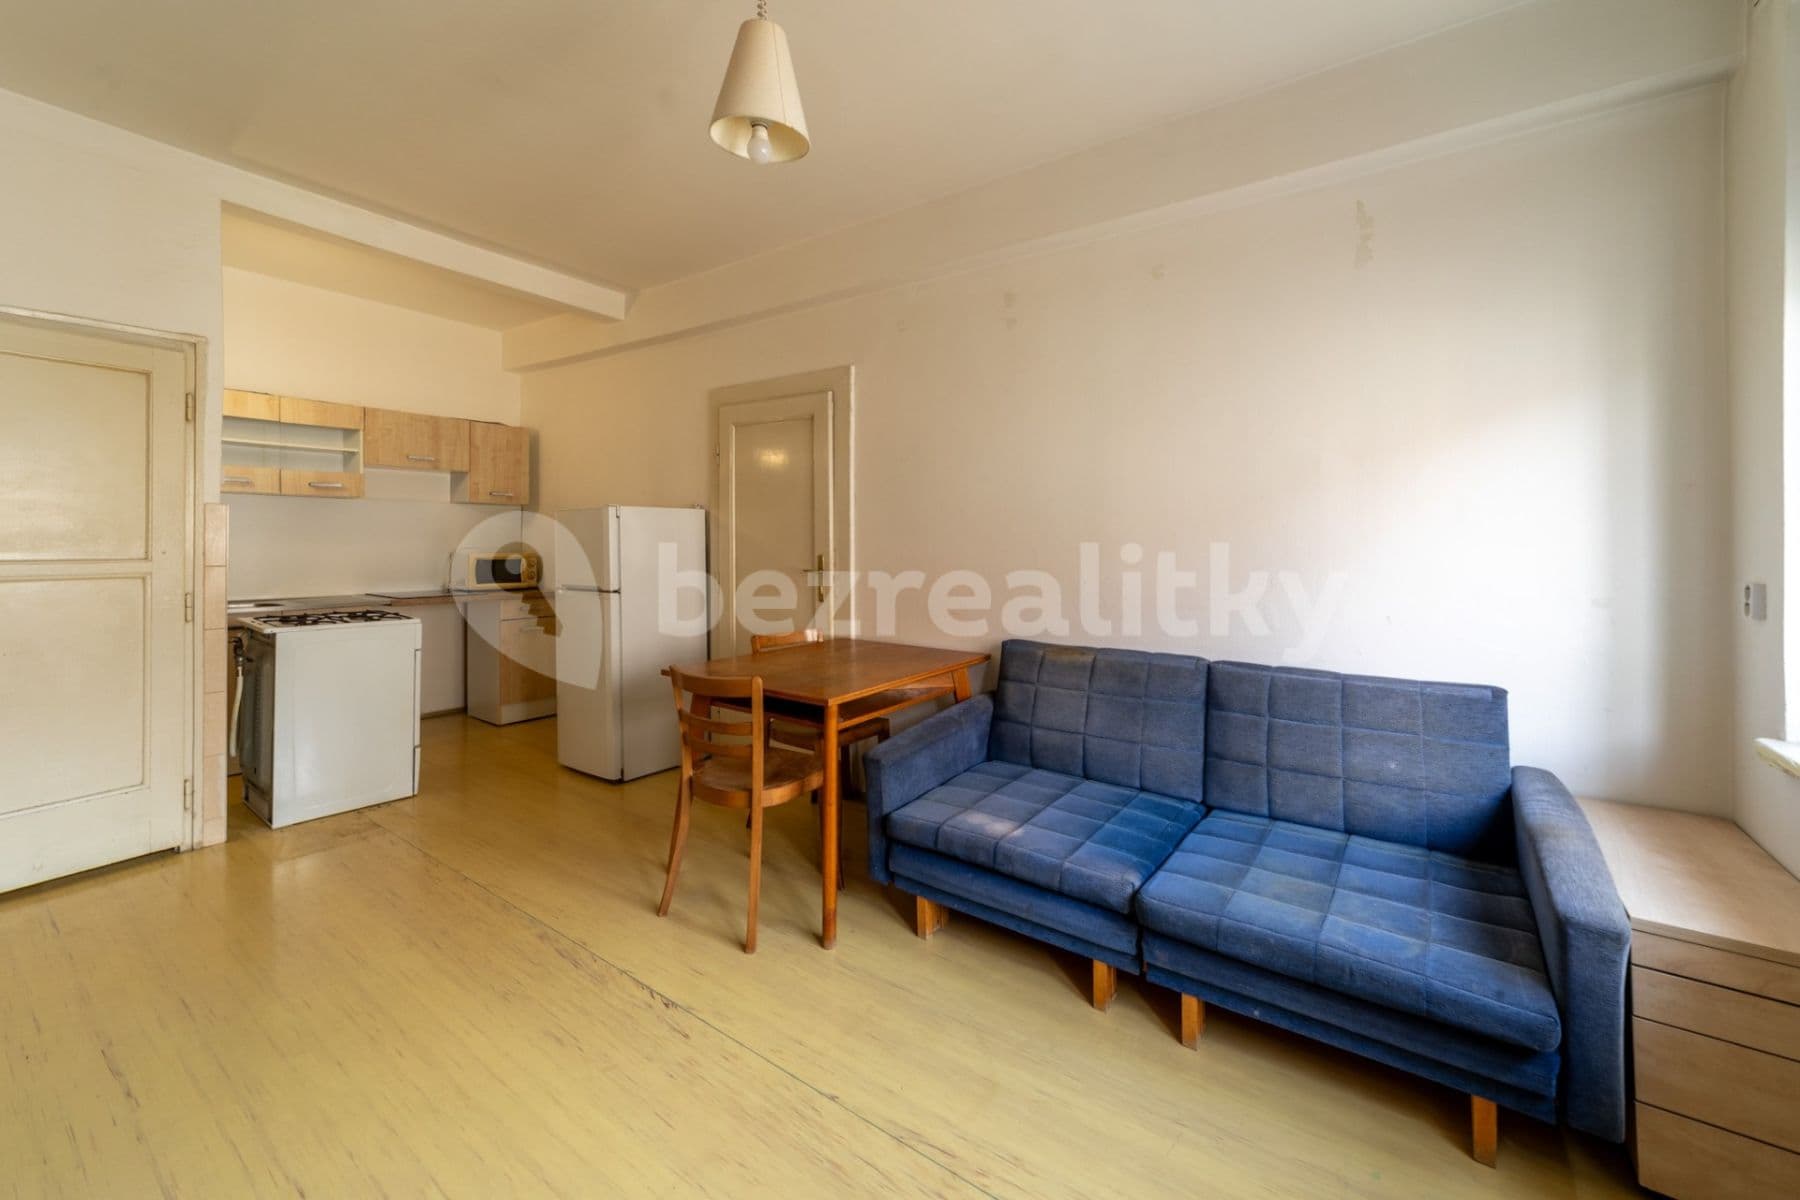 1 bedroom with open-plan kitchen flat for sale, 45 m², Pivovarnická, Prague, Prague